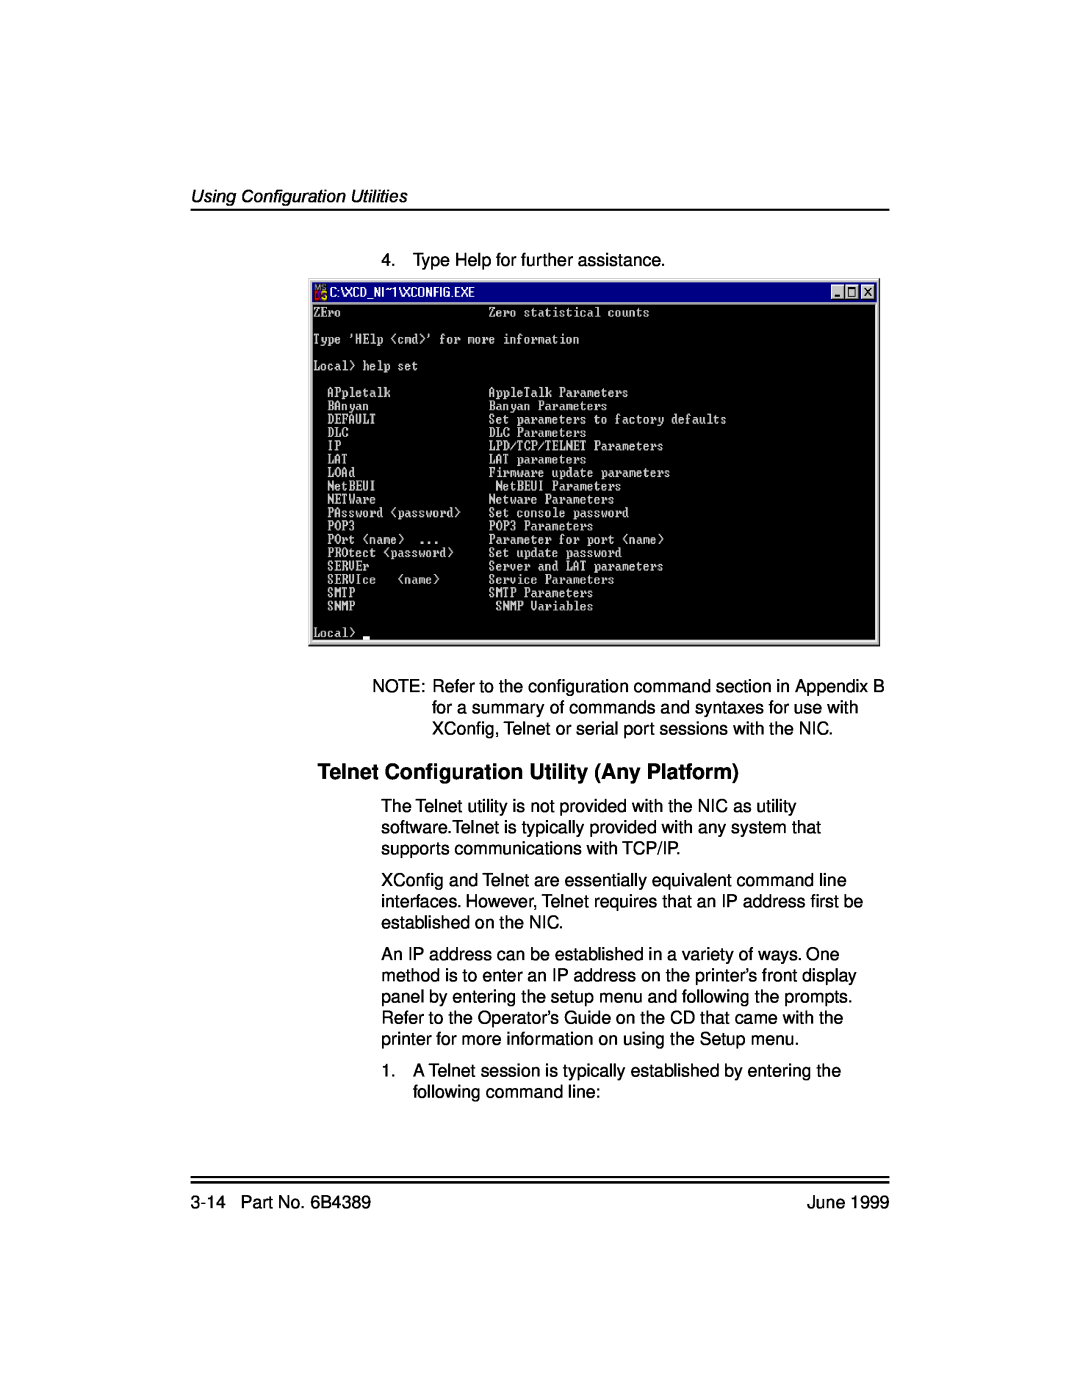 Kodak 8670, 8660 manual Telnet Conﬁguration Utility Any Platform, Using Configuration Utilities 